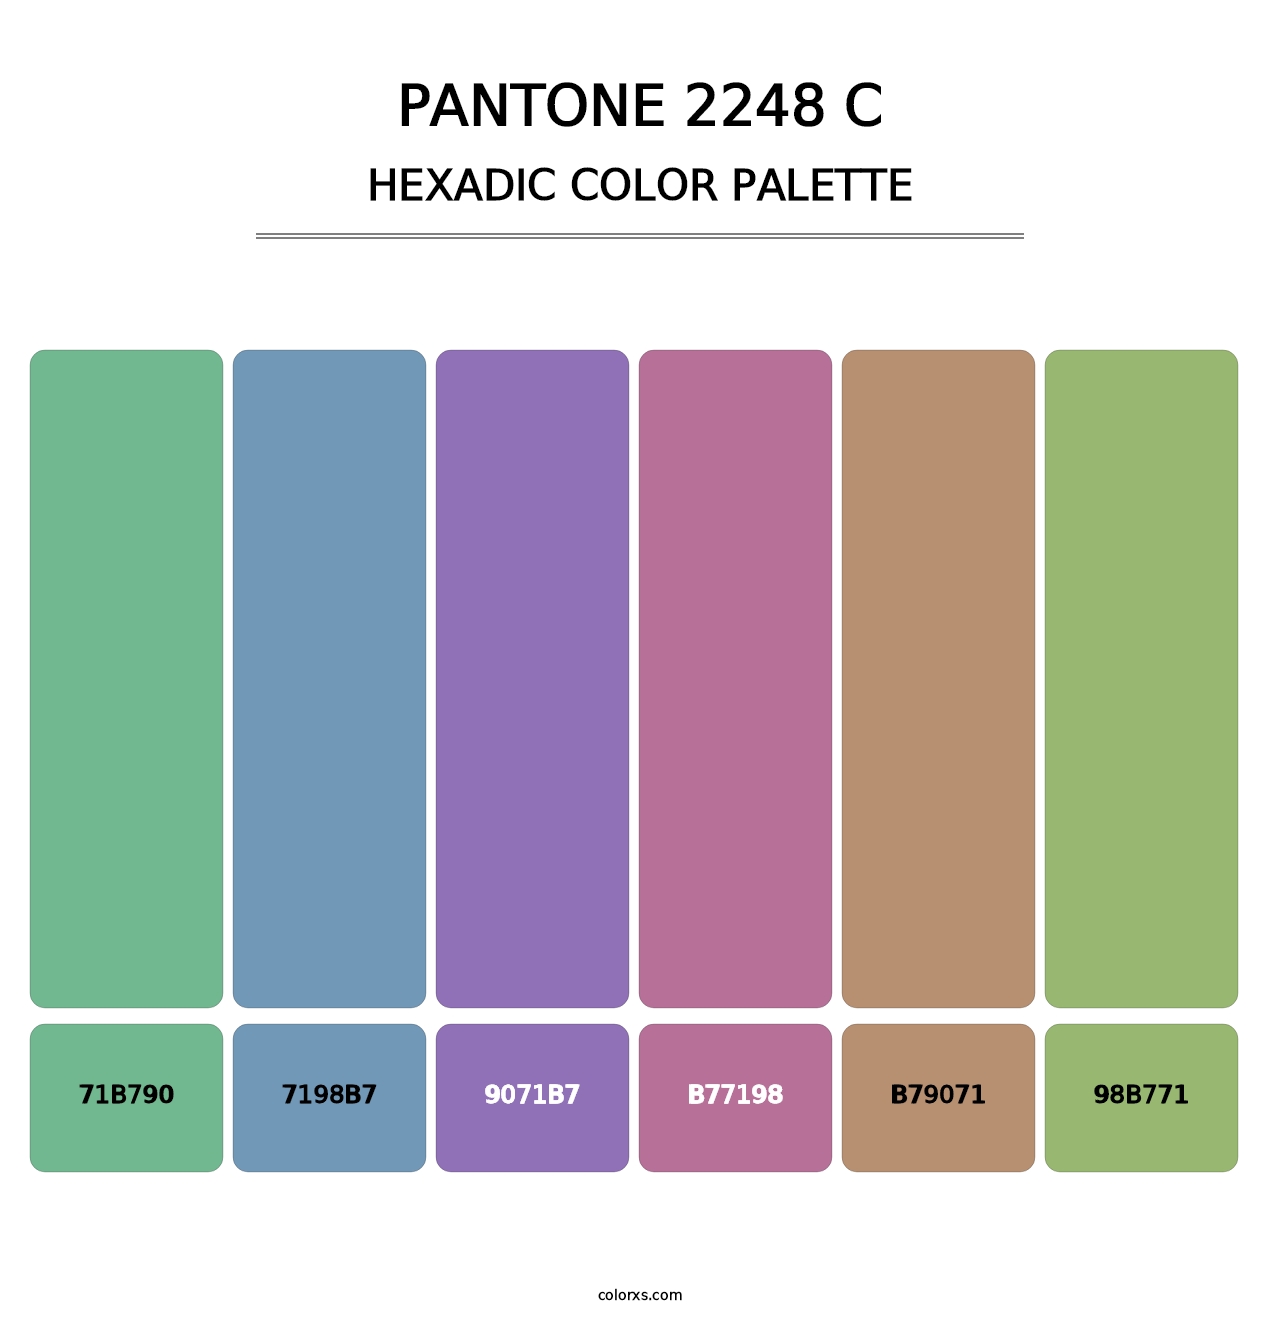 PANTONE 2248 C - Hexadic Color Palette